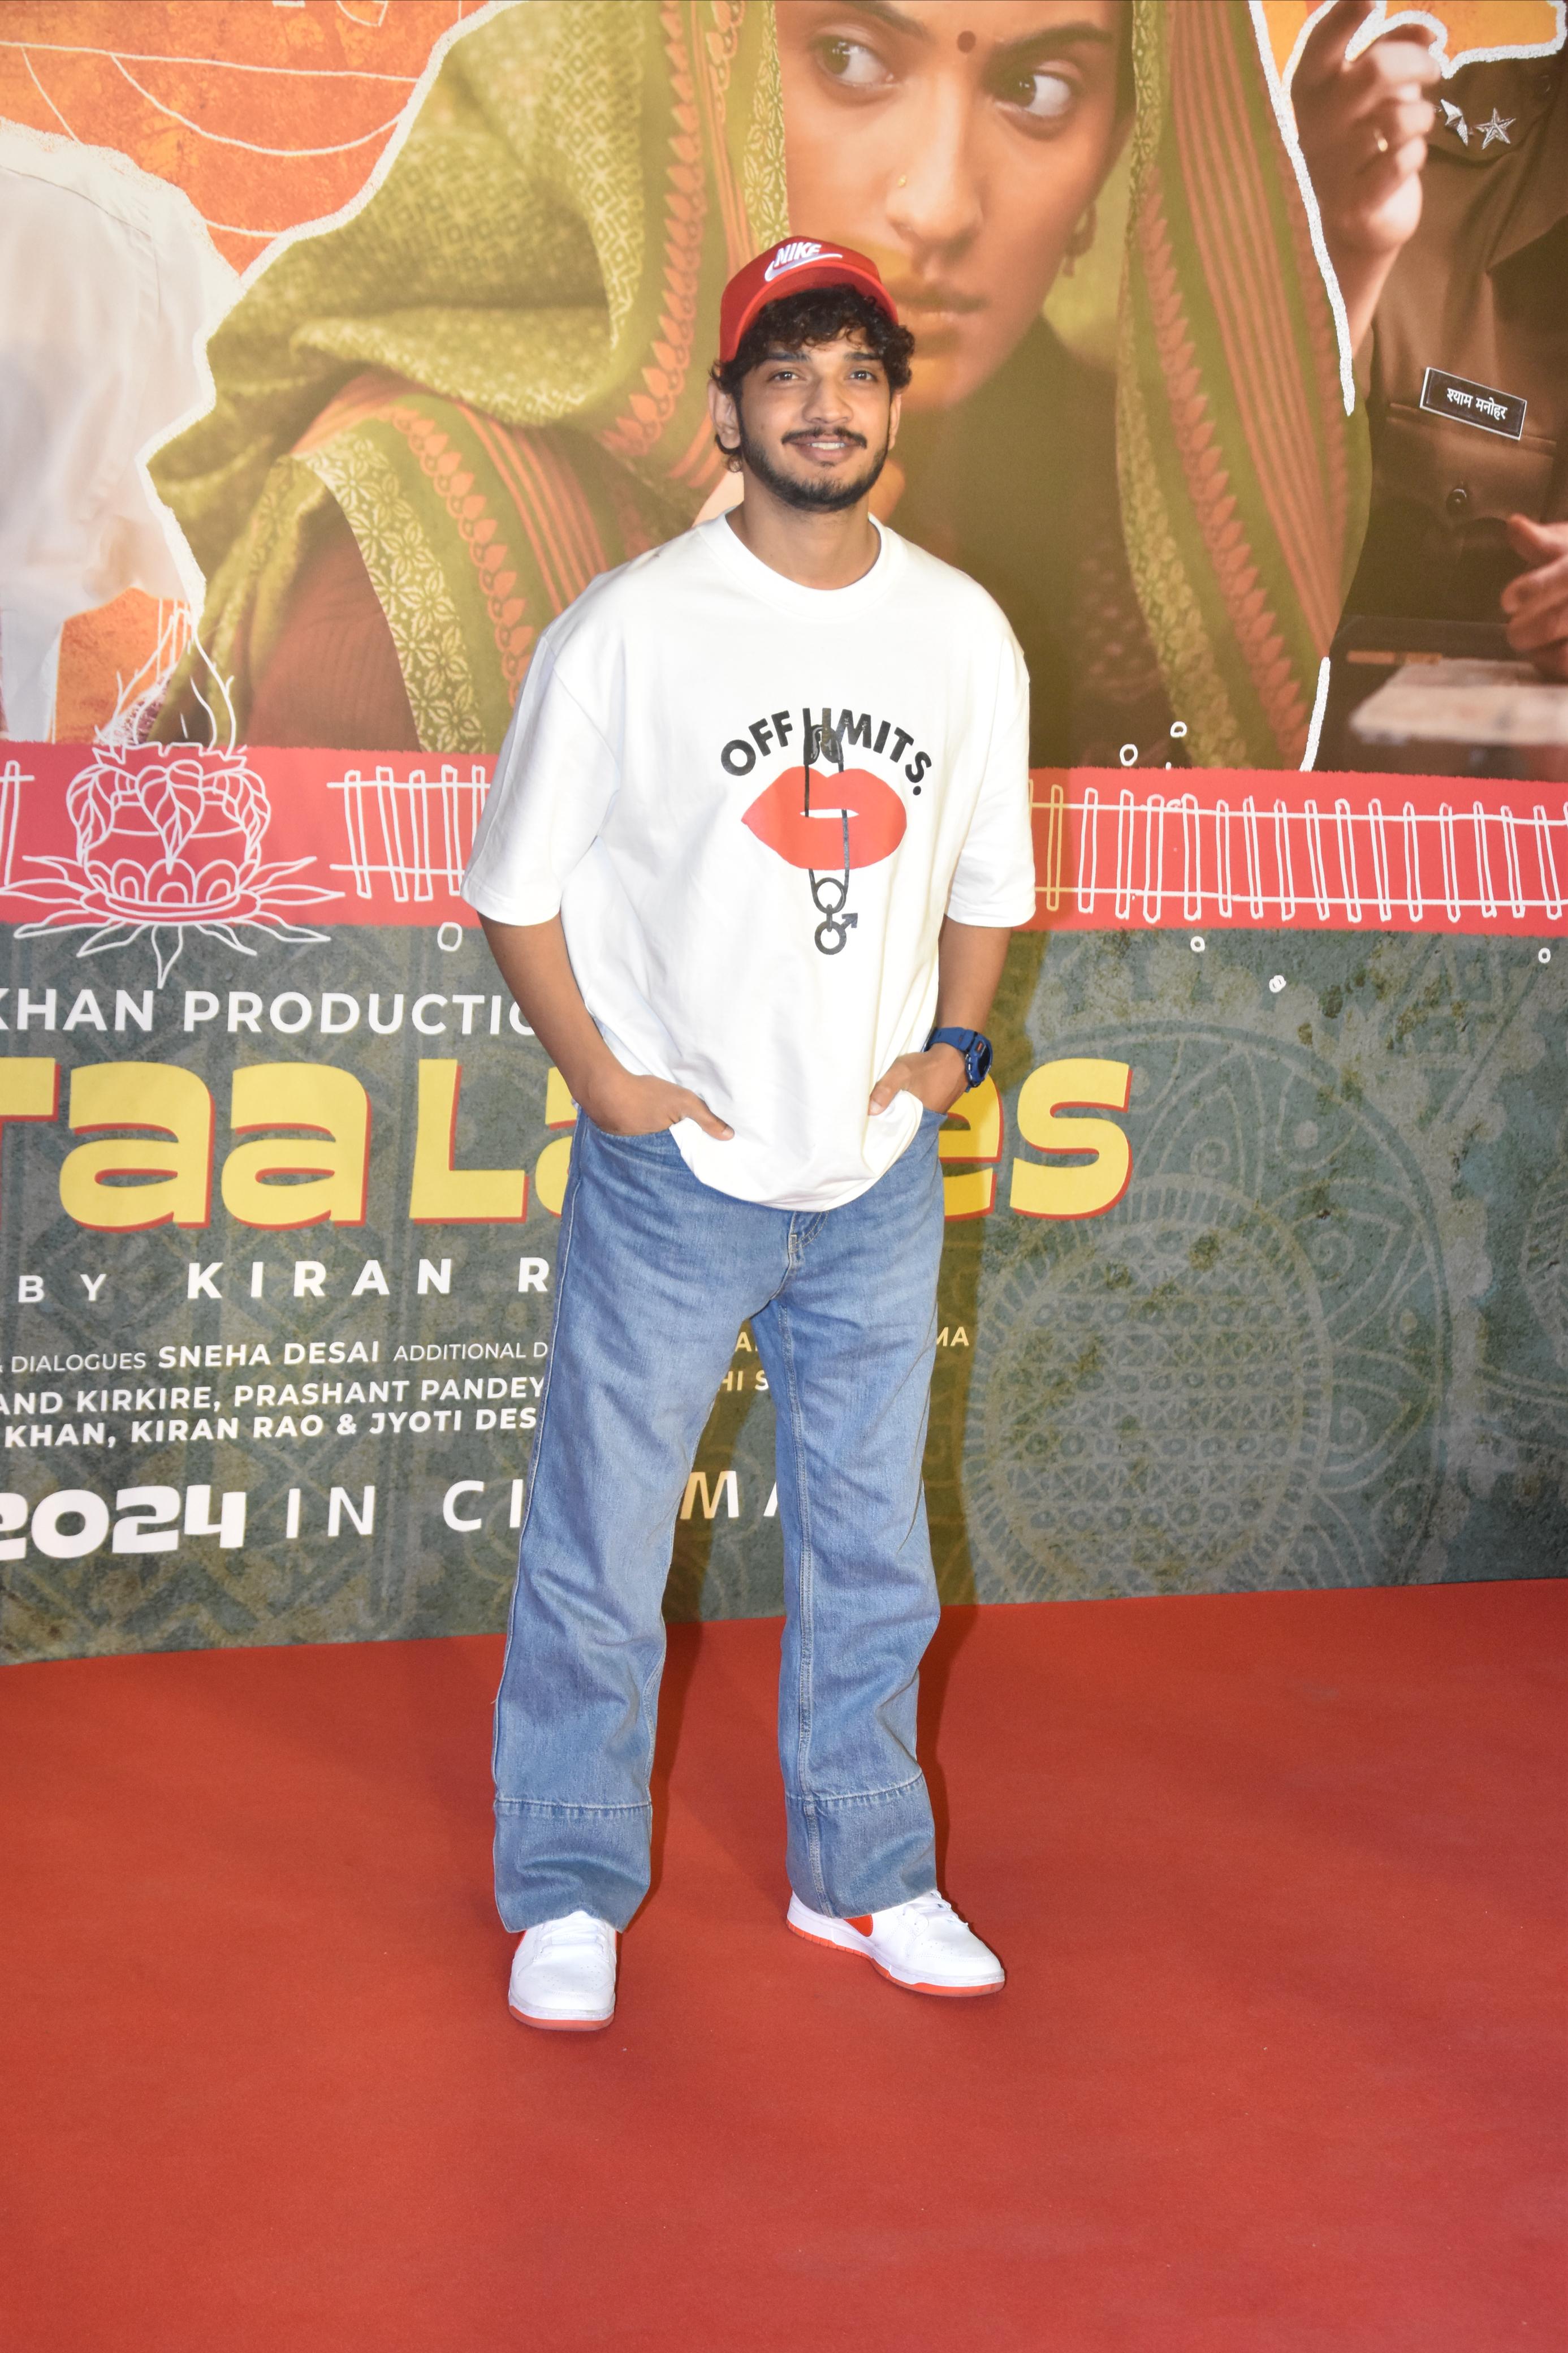 Bigg Boss 17 winner Munawar Faruqui was among the celebrities who attended the screening